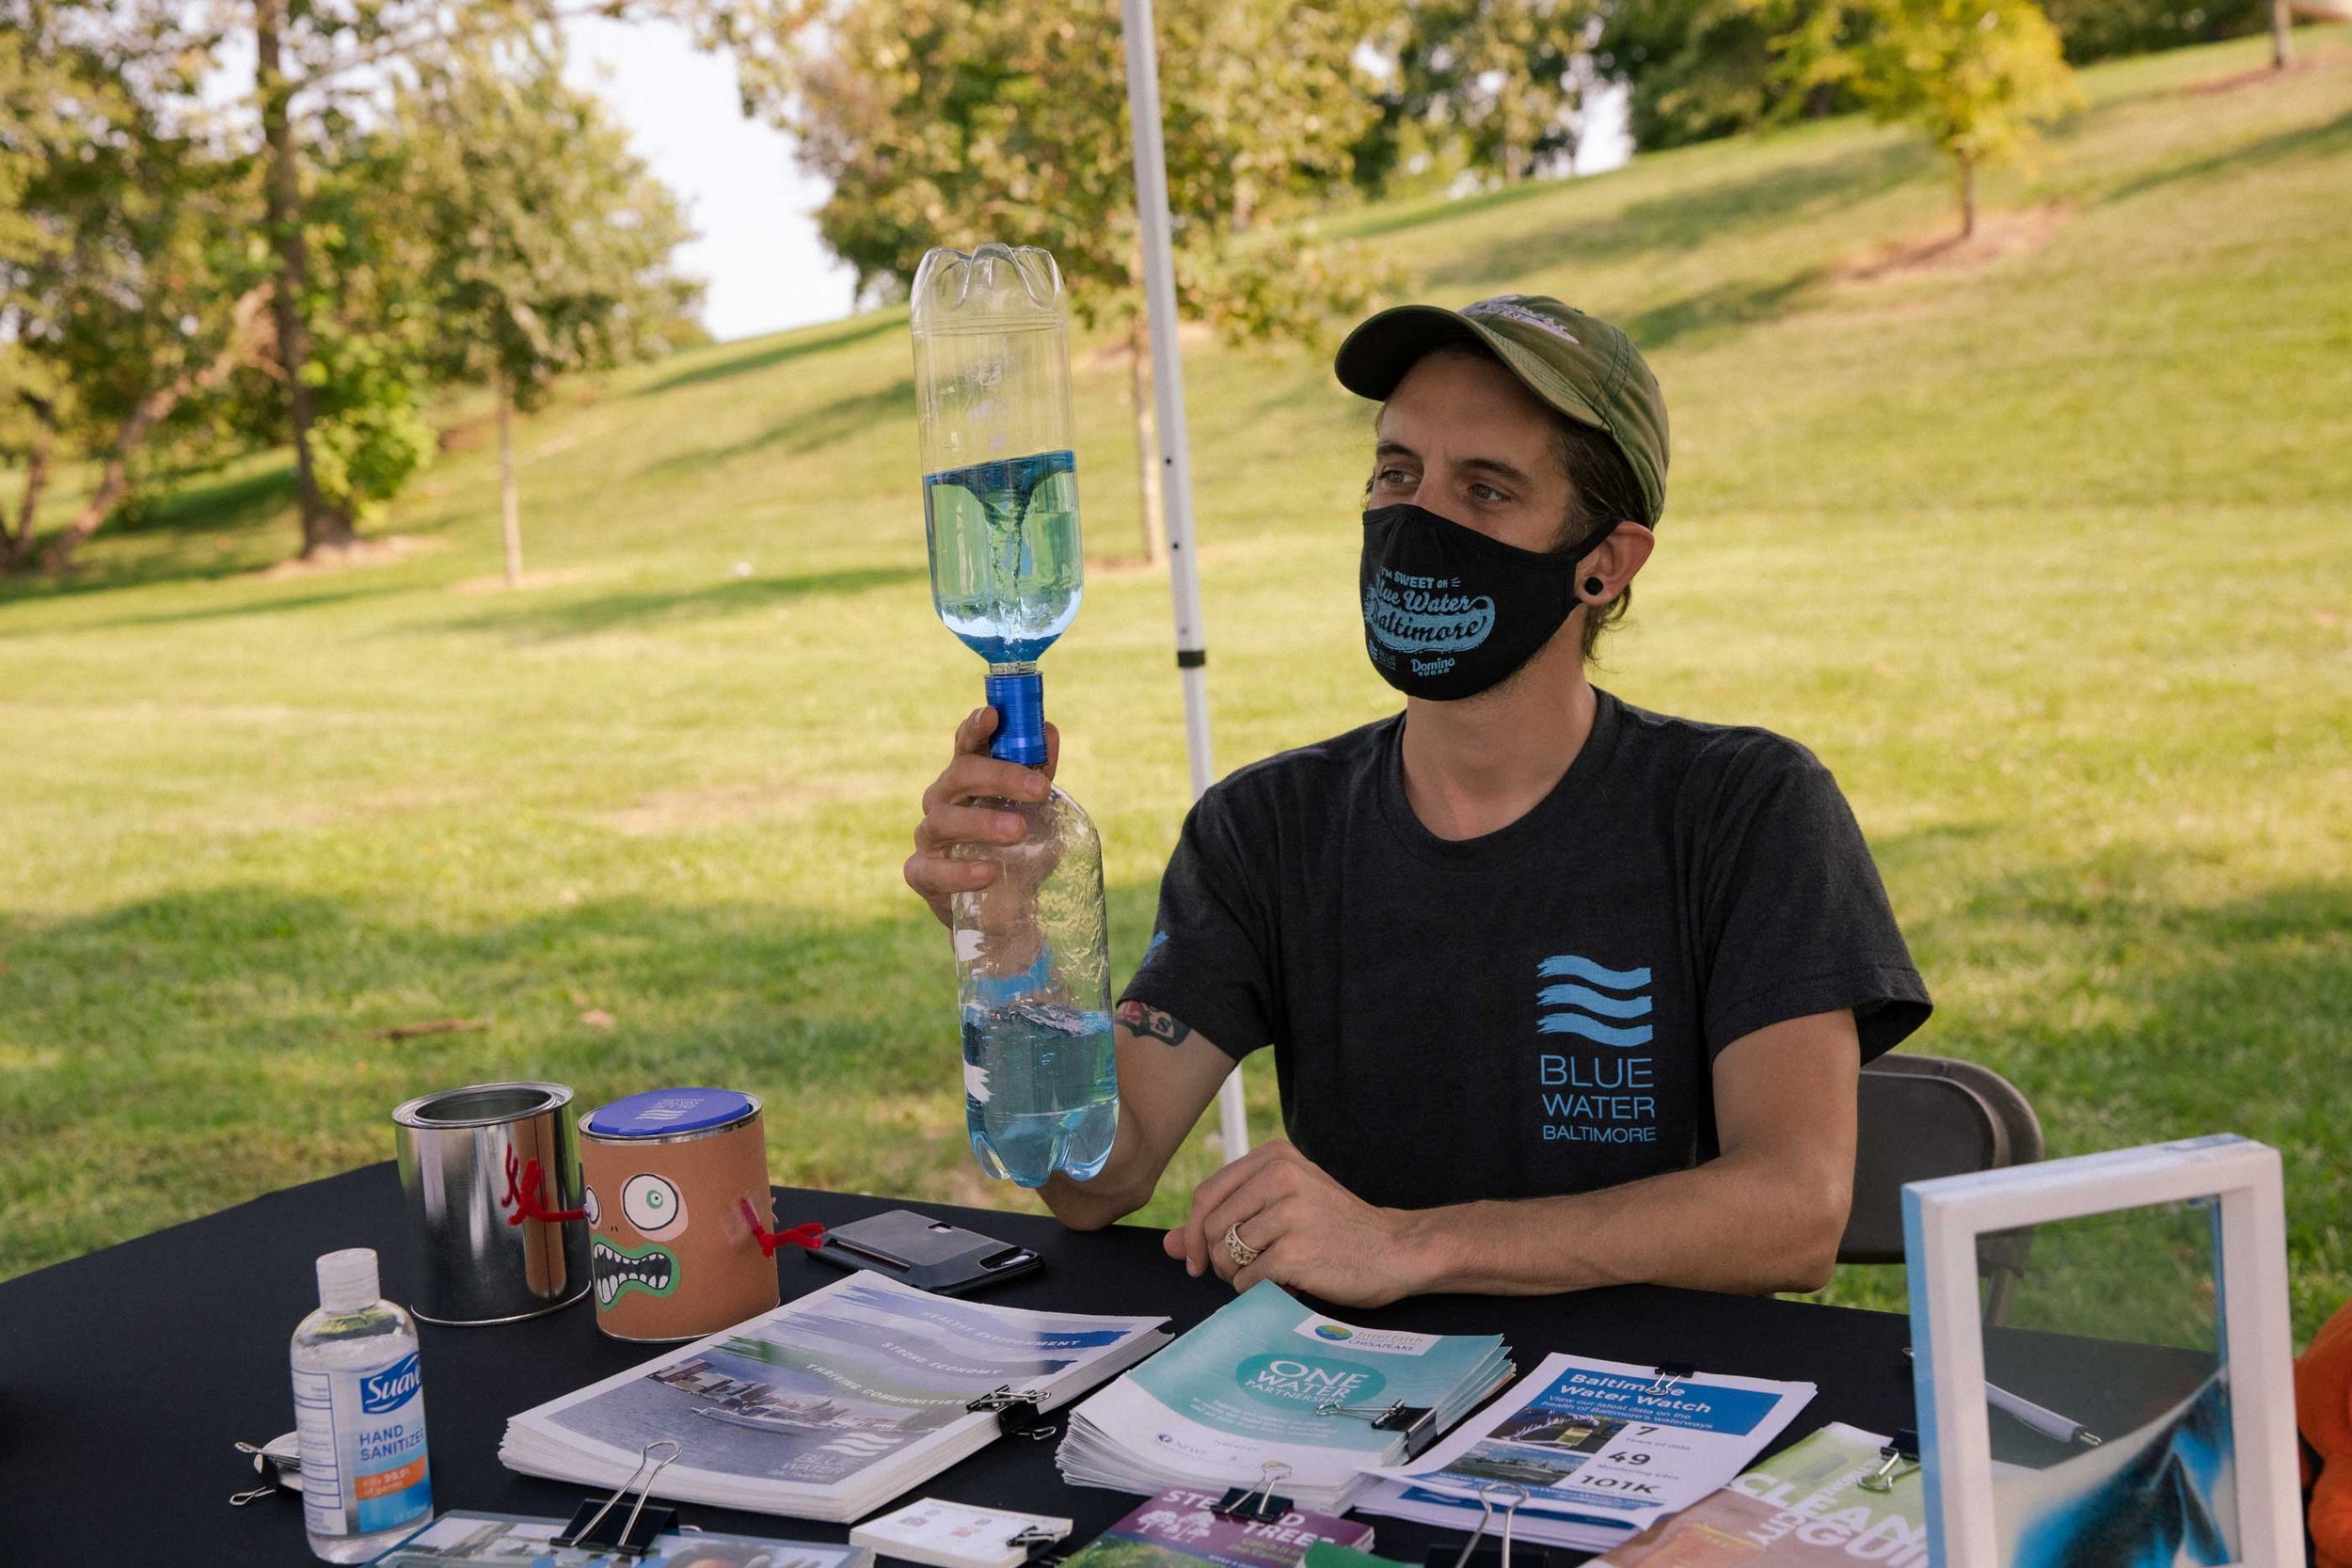  Blue Water Baltimore volunteer in tent demonstrates how whirlpools work 